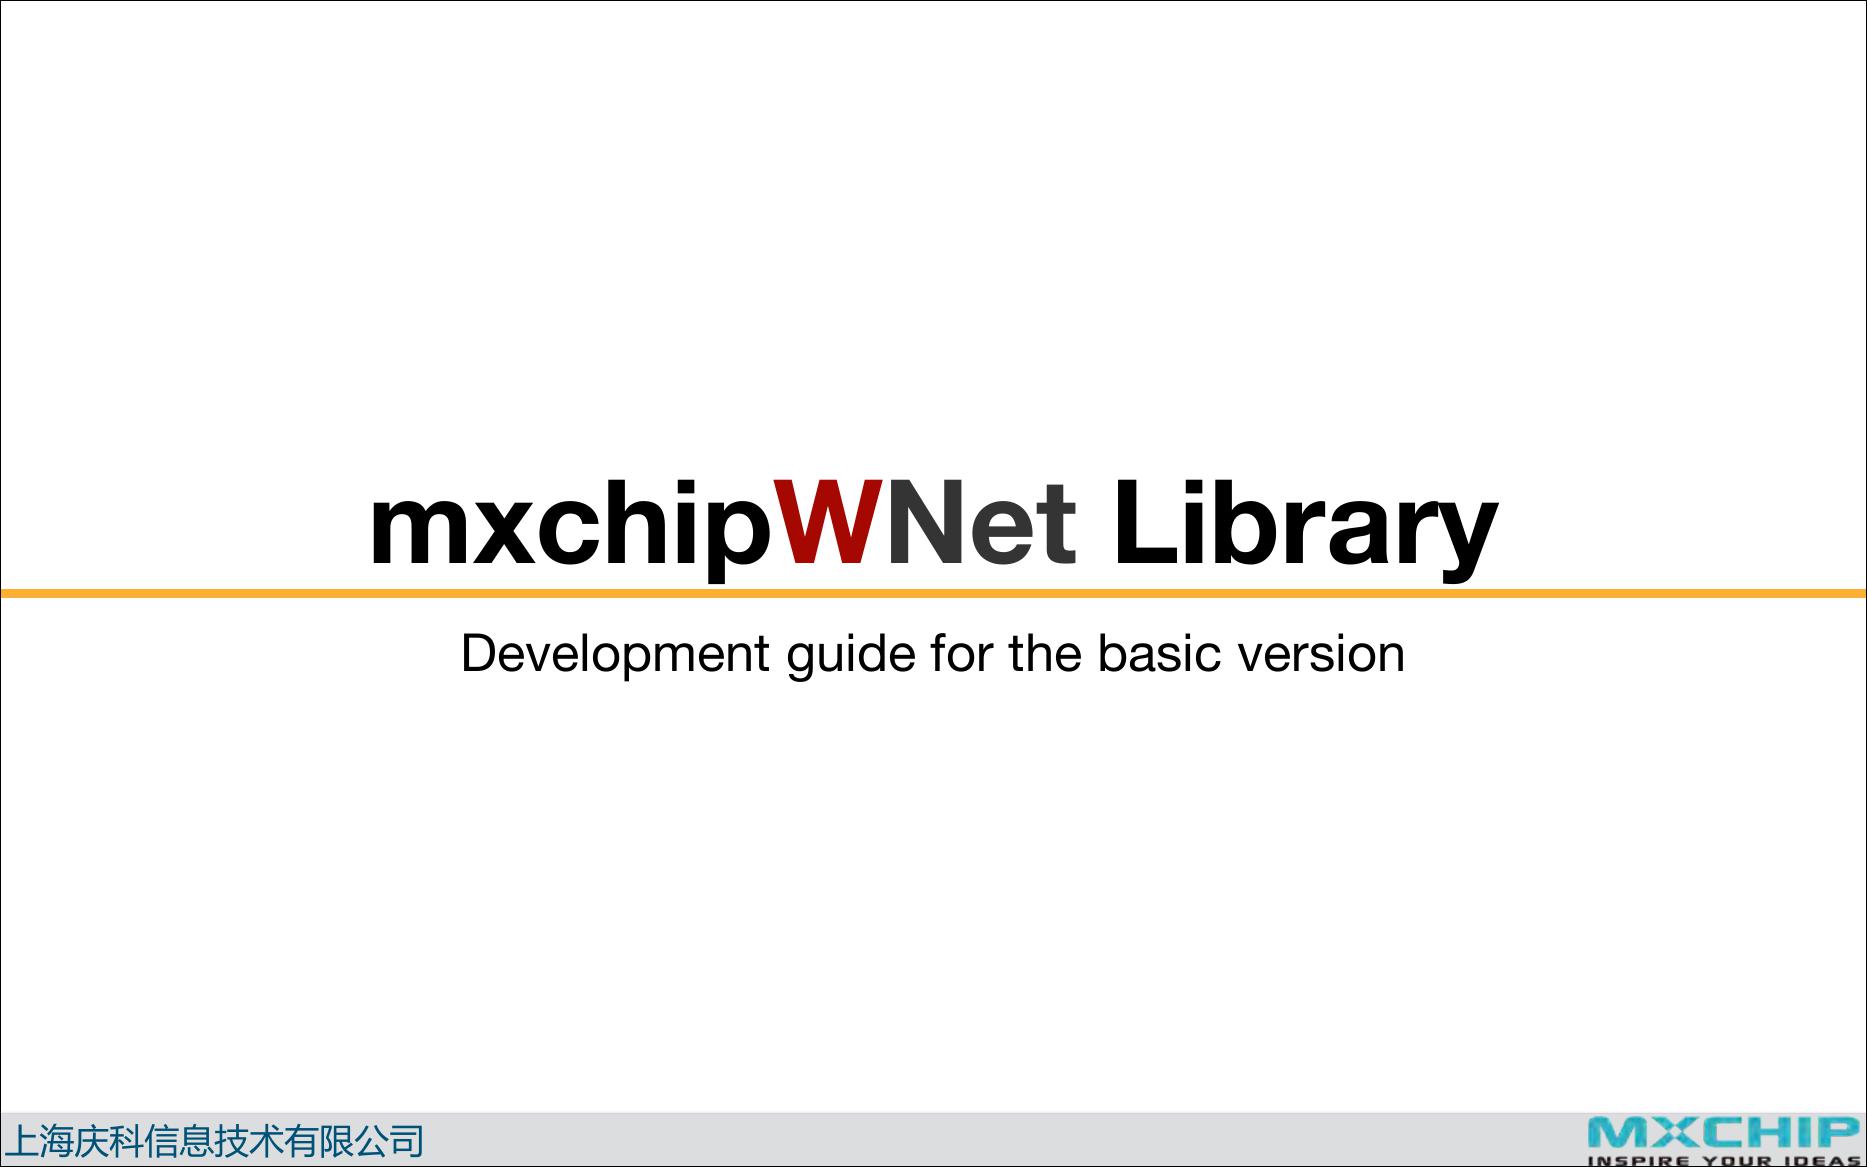 mxchipWNet基础版软件库开发指南(AD0005_mxchipWNet_Library).pdf